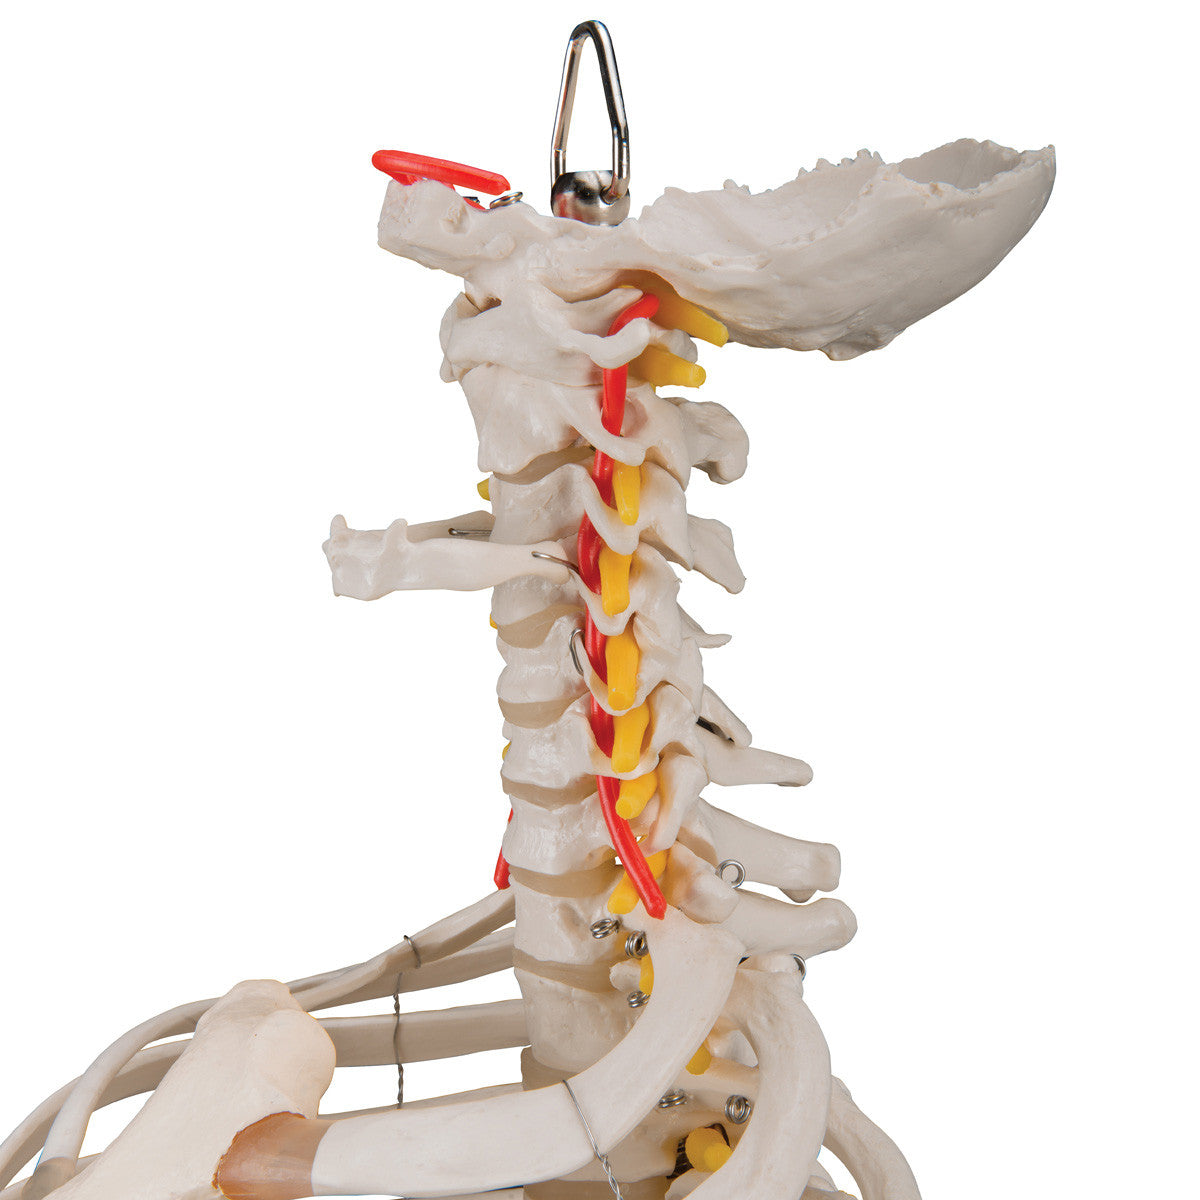 a56-2_05_1200_1200_classic-flexible-human-spine-model-with-ribs-femur-heads-3b-smart-anatomy__01927.1589753250.1280.1280.jpg